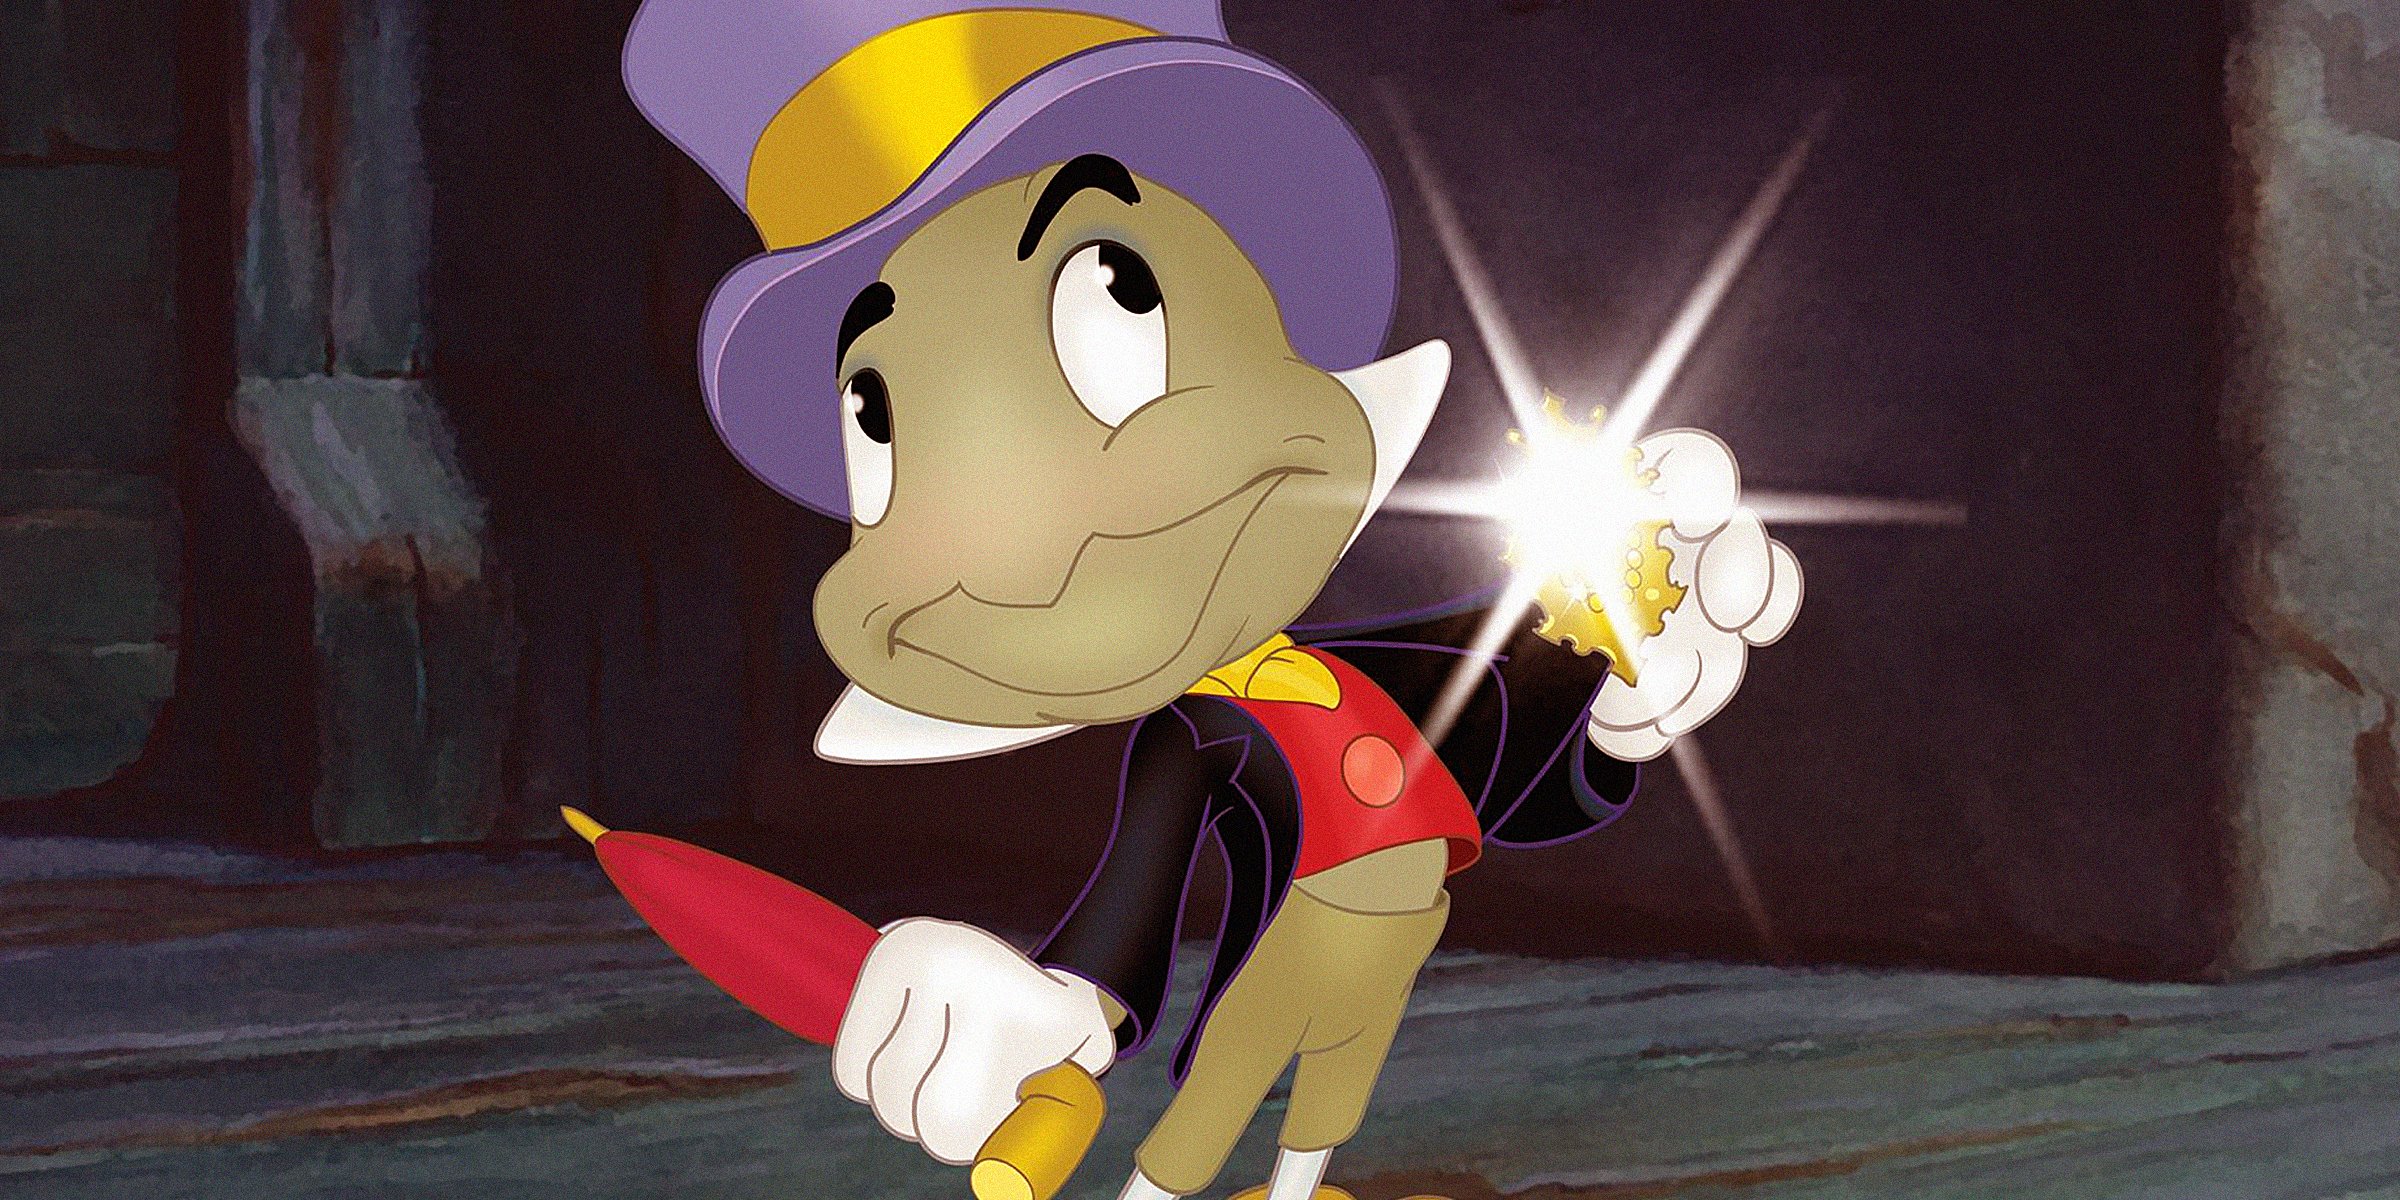 Jiminy Cricket | Source: facebook.com/DisneyPinocchio